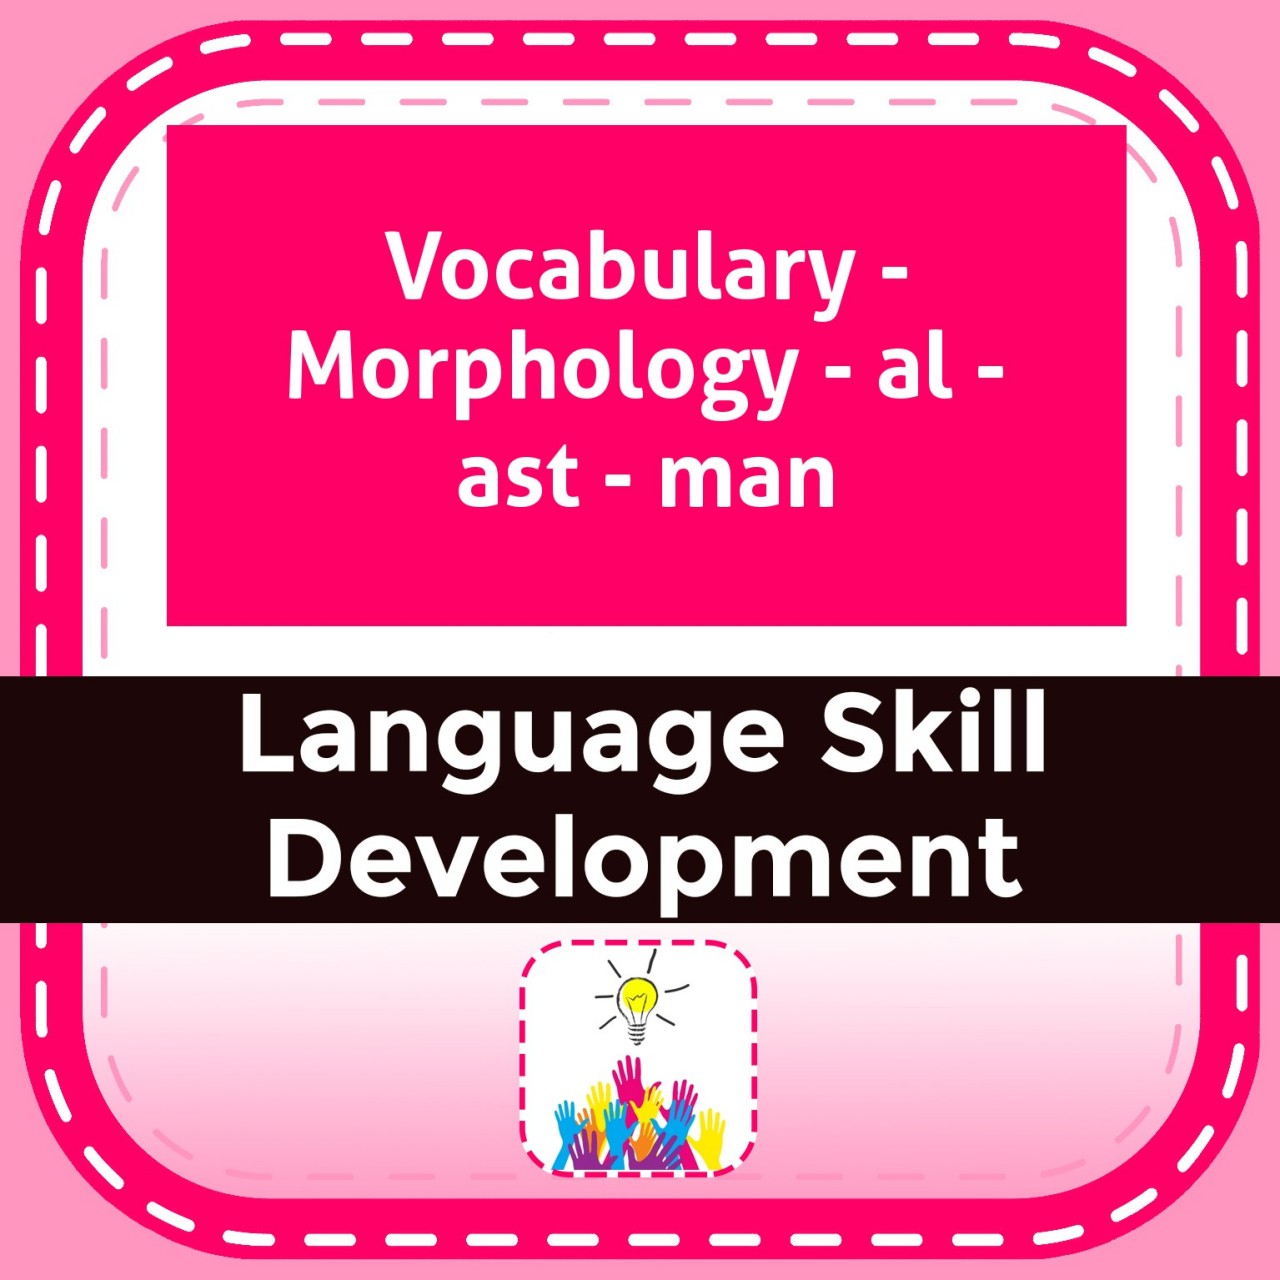 Vocabulary - Morphology - al - ast - man